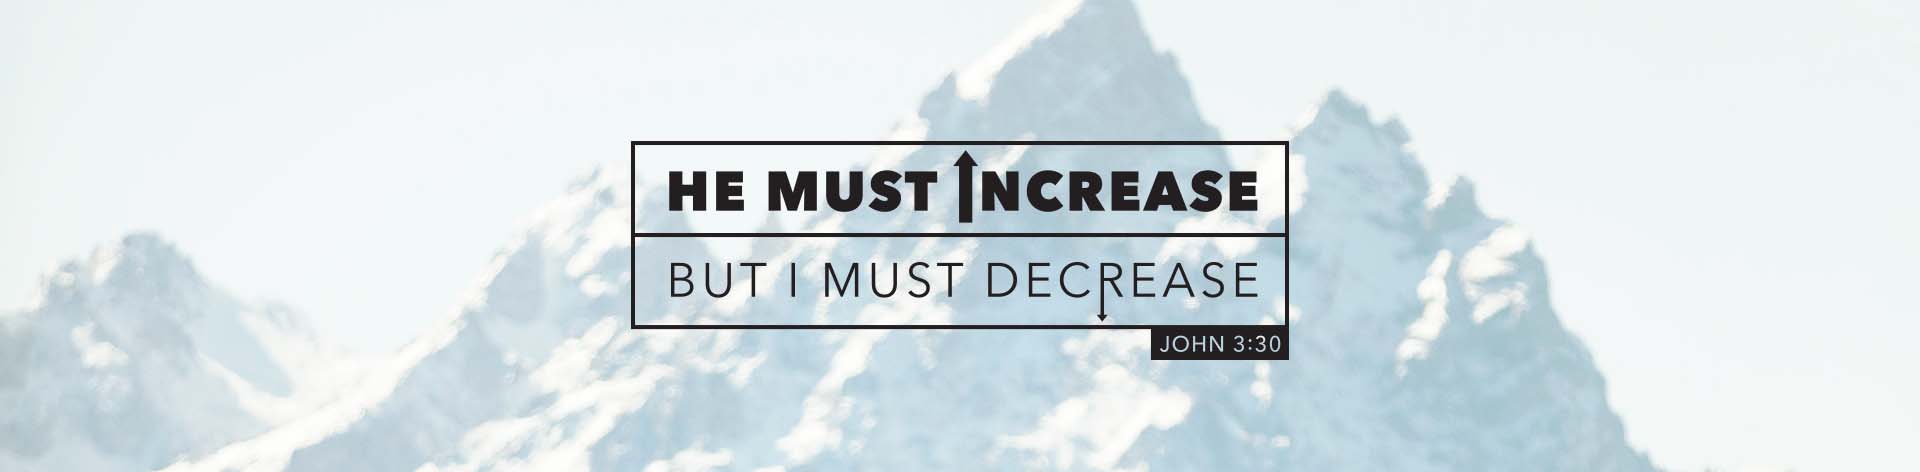 He must increase but I must decrease. John 3:30